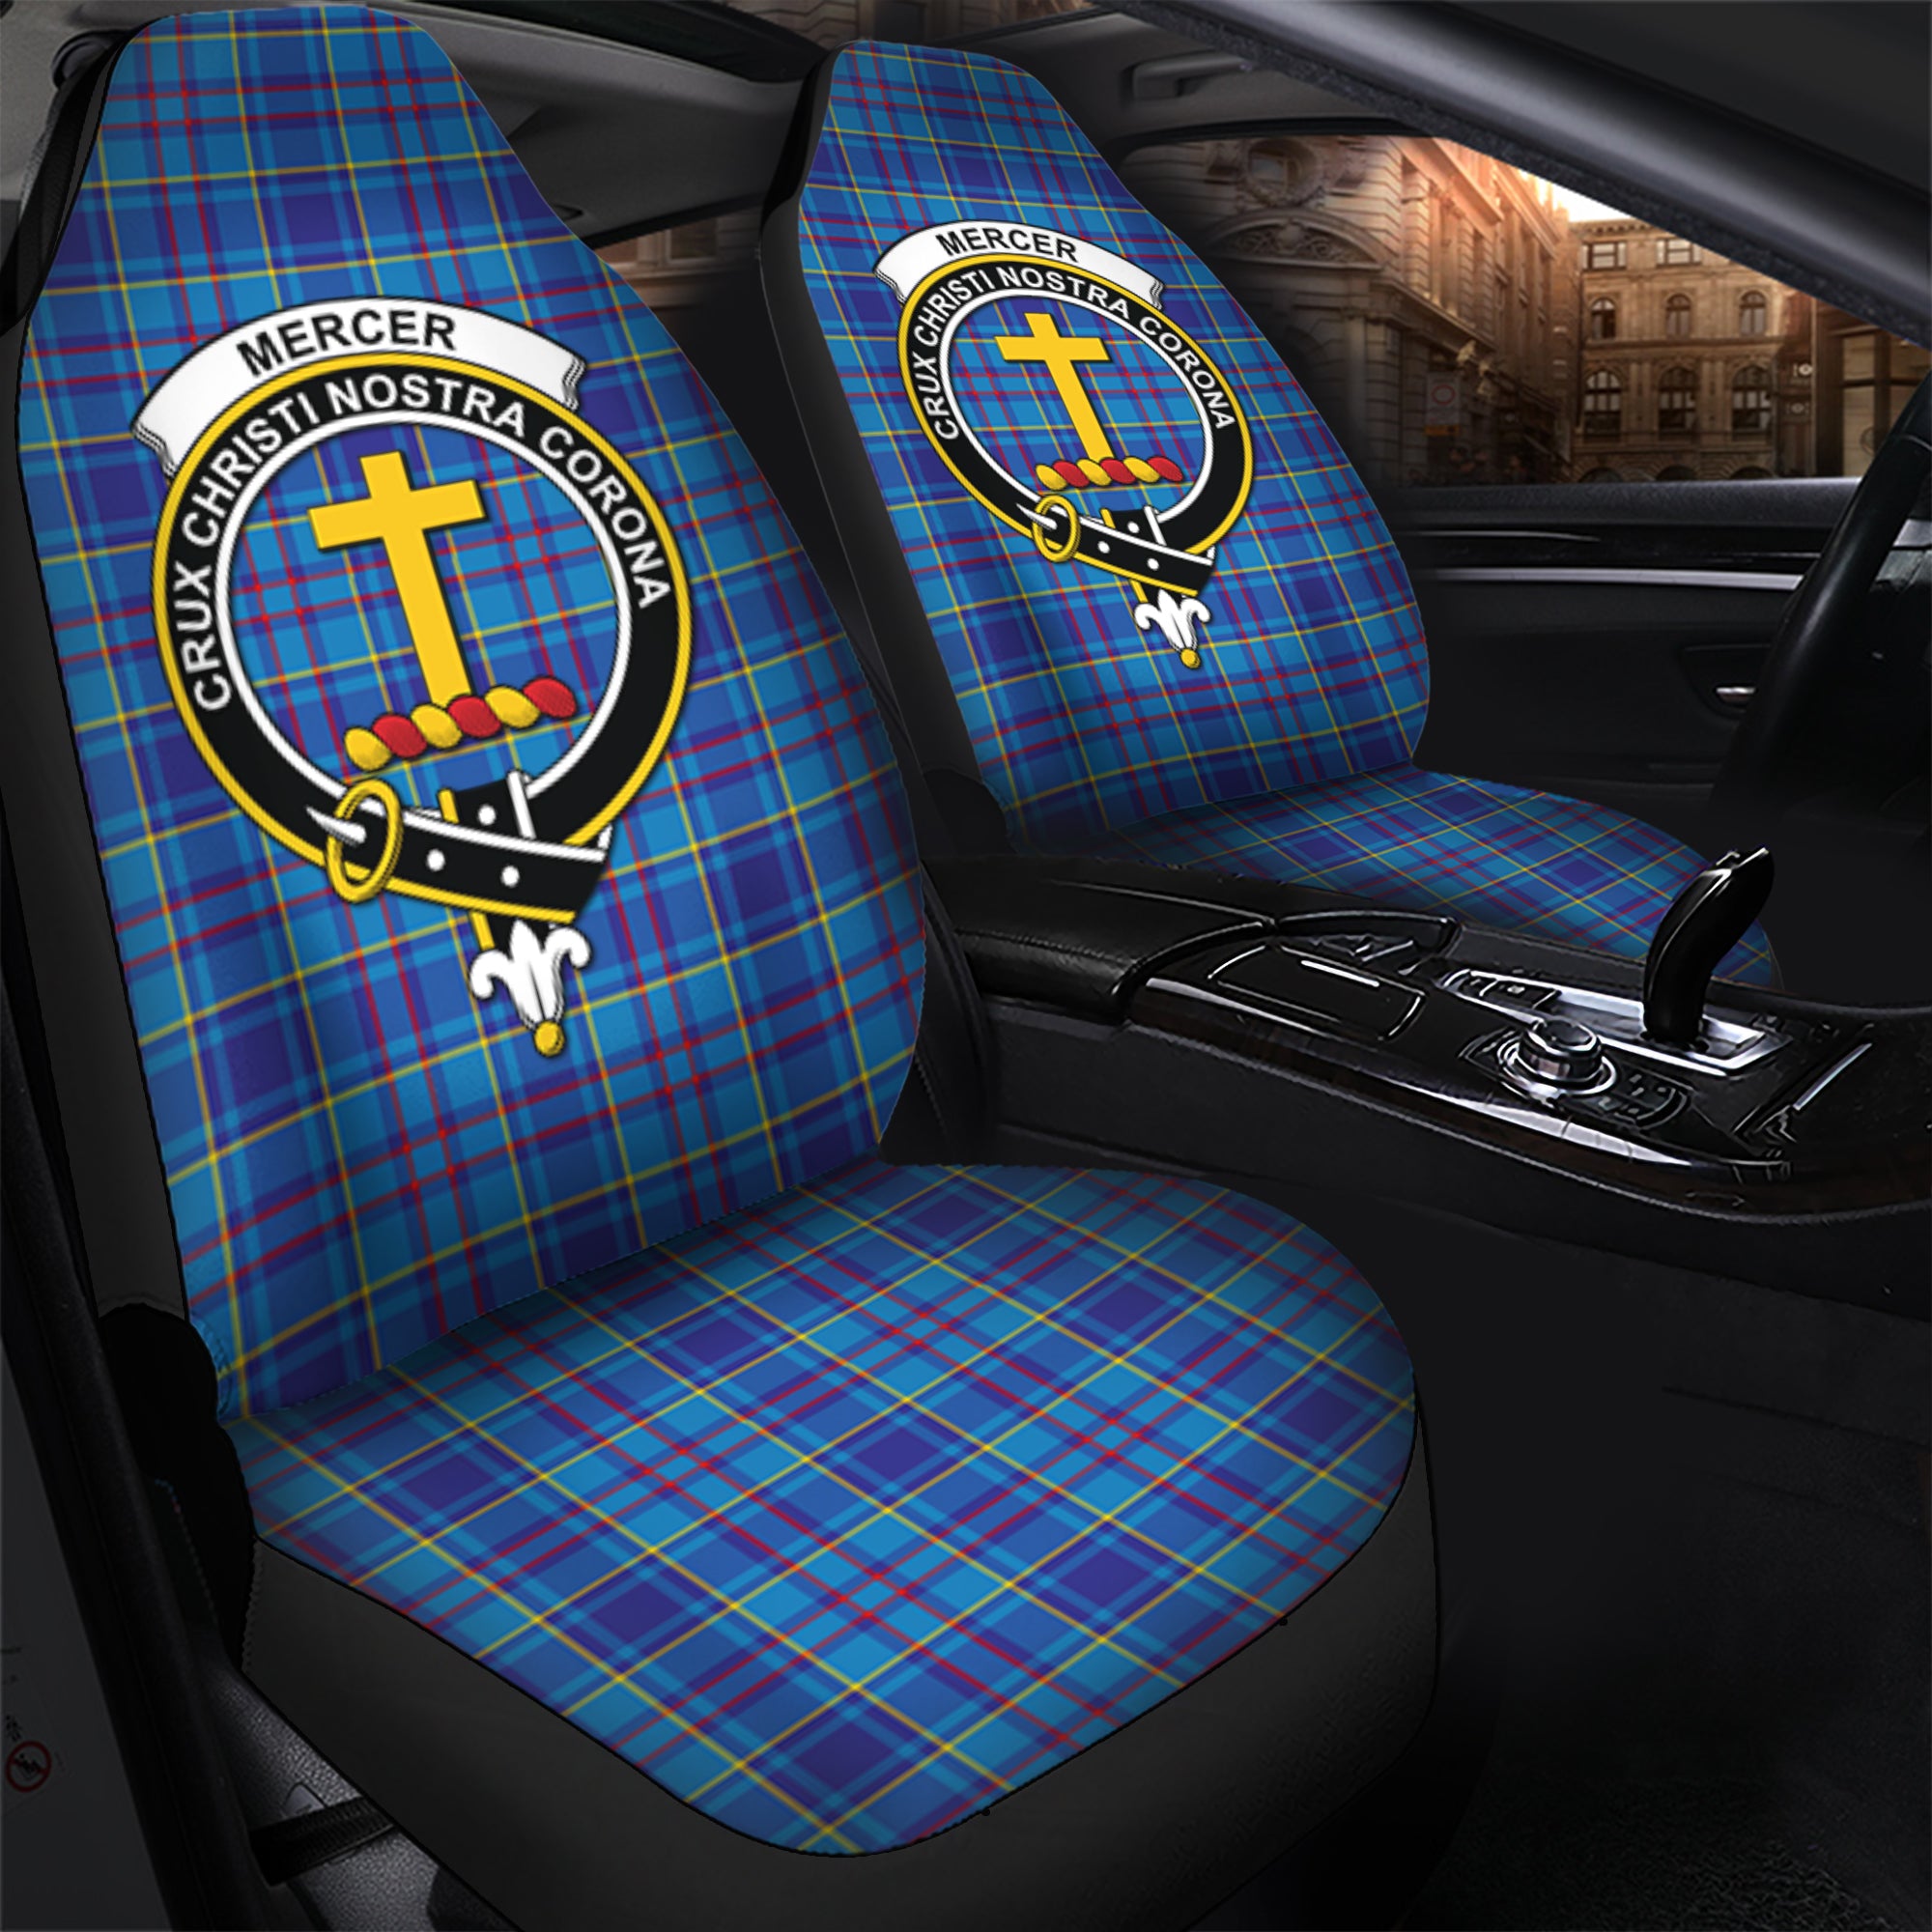 Mercer Modern Clan Tartan Car Seat Cover, Family Crest Tartan Seat Cover TS23